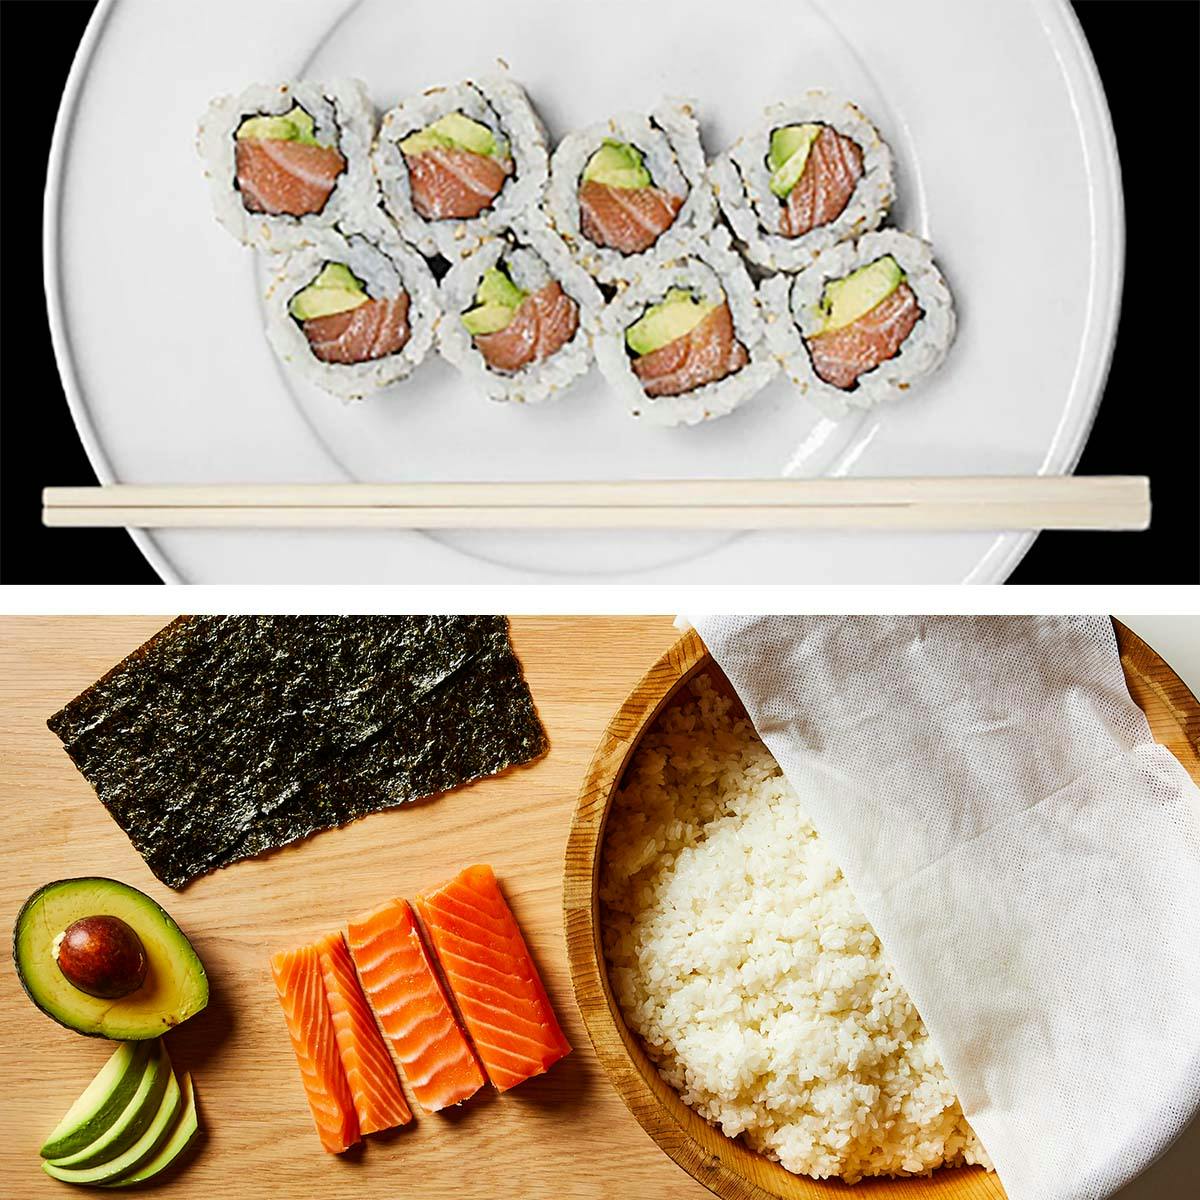 Sushi Chef Making Kit Gift Pack